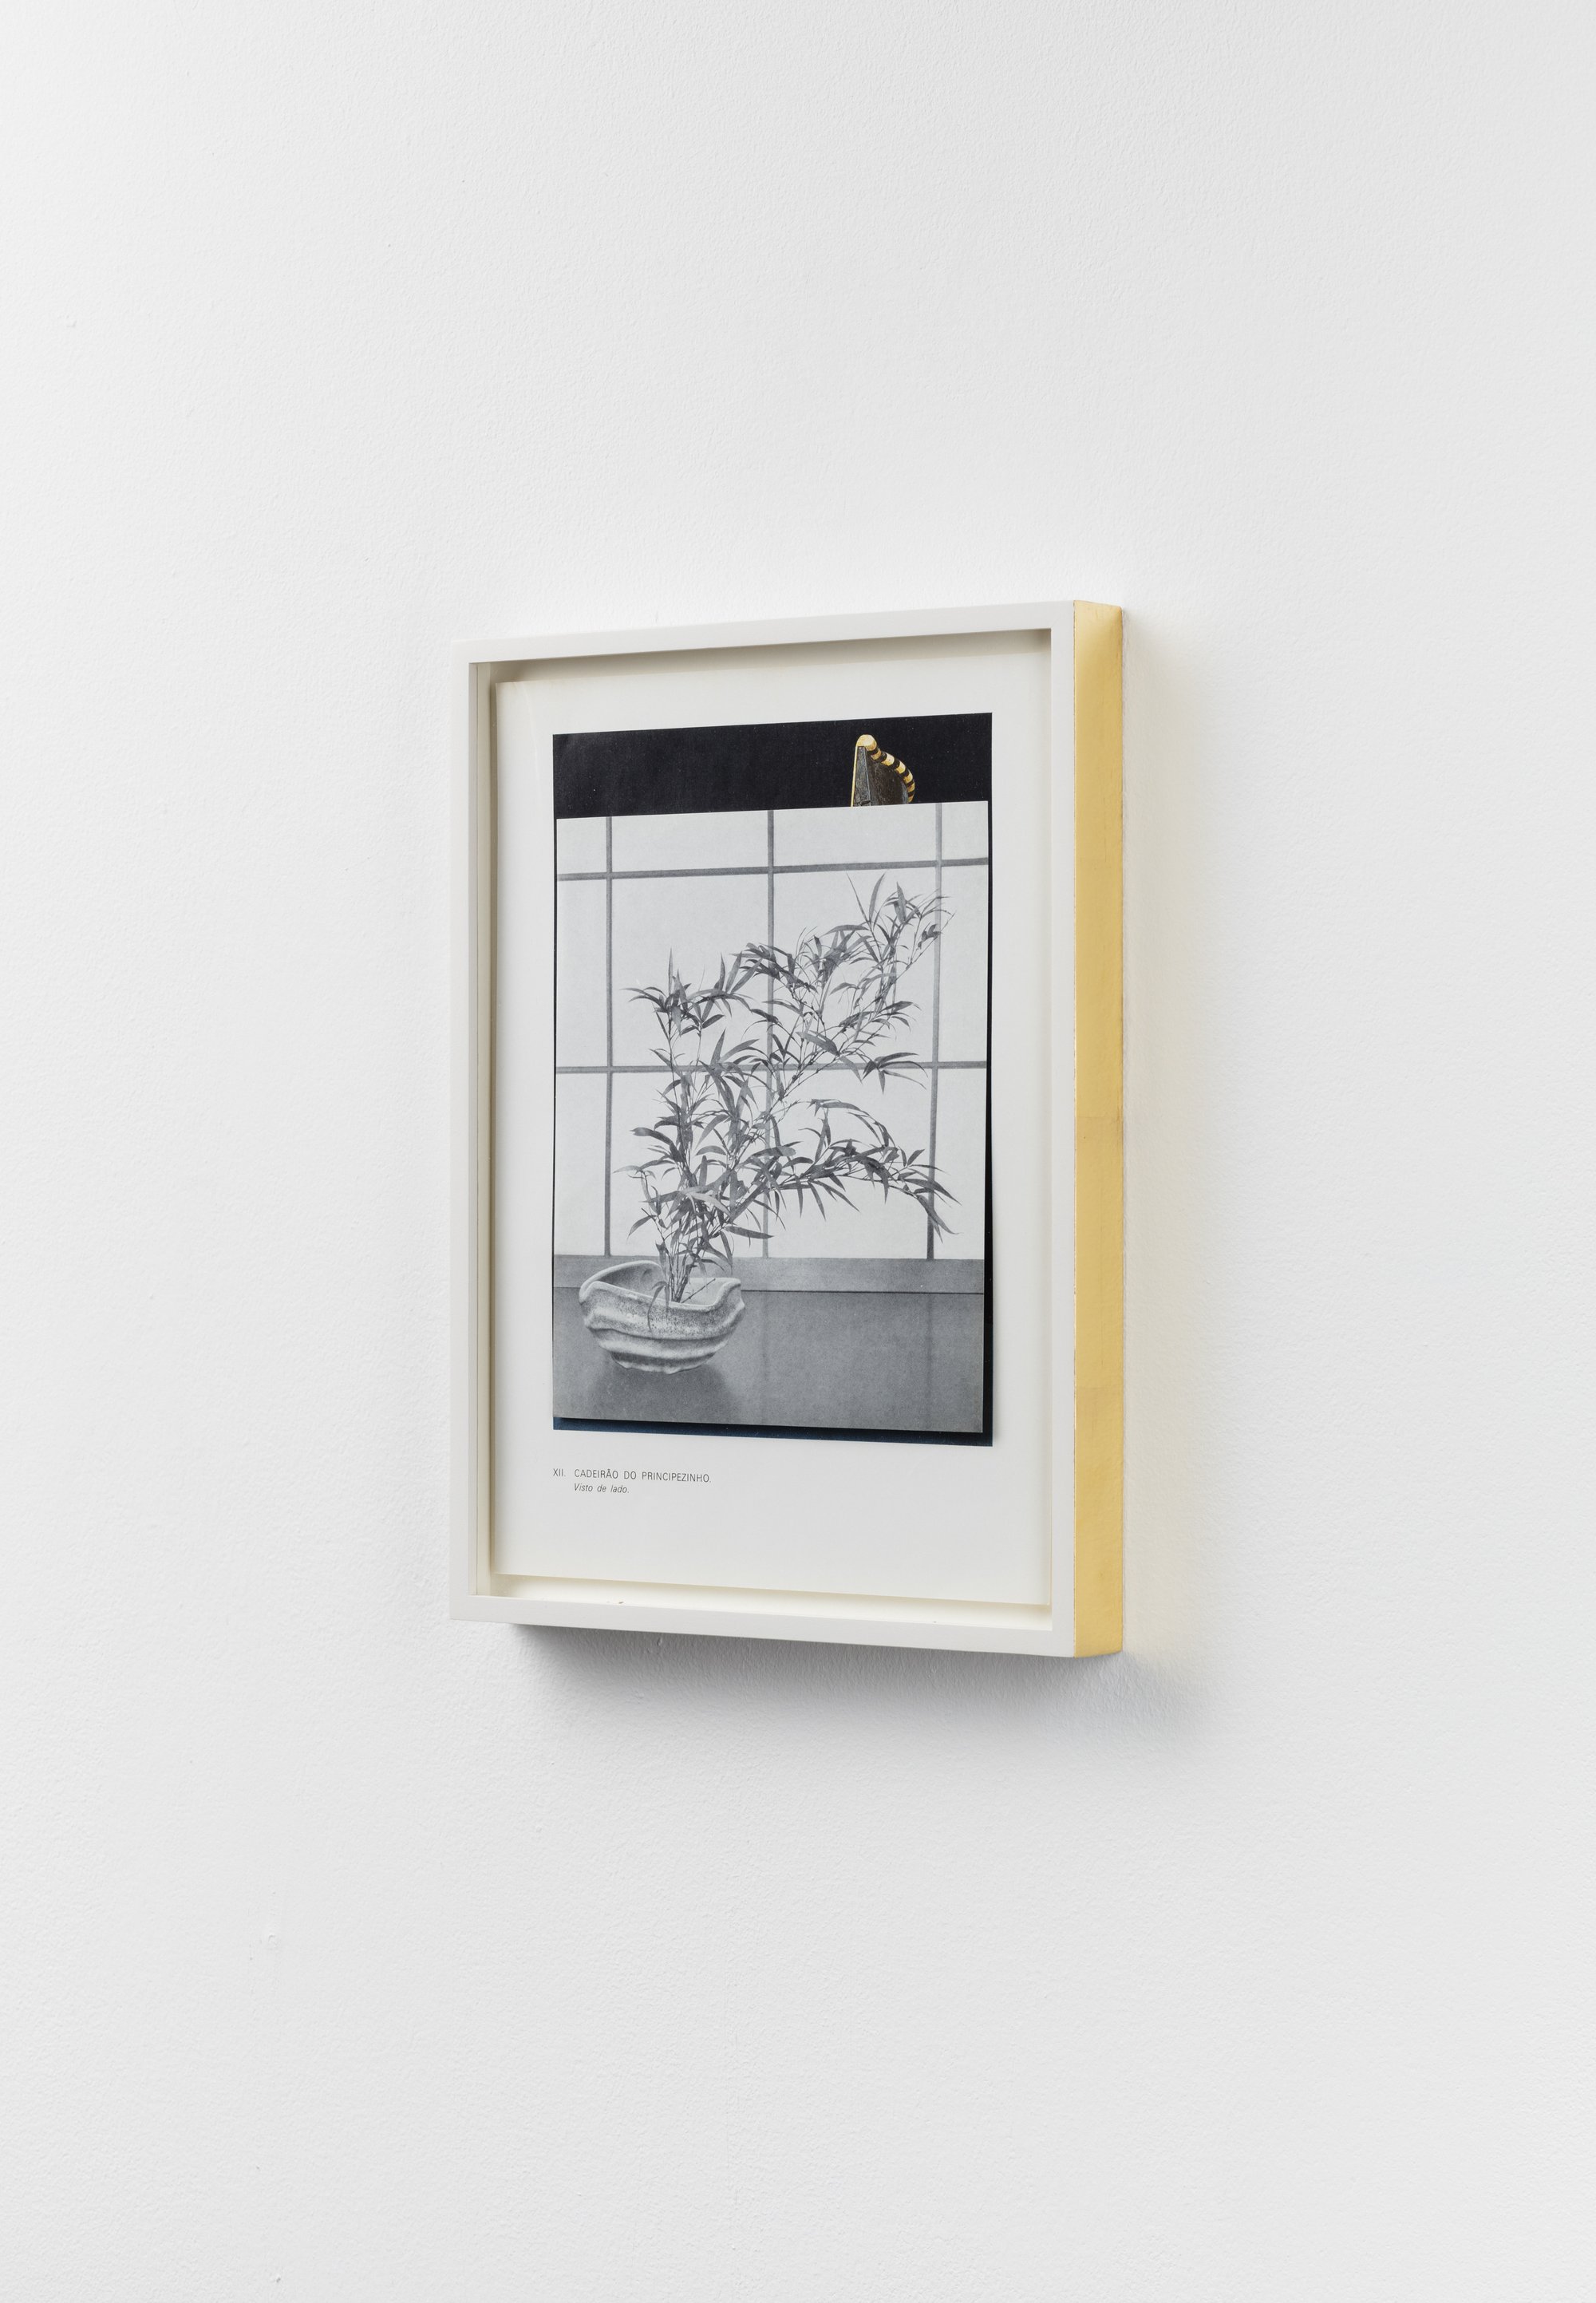 Haris Epaminonda, Untitled #19 b/h, collage on paper, framed, 30 x 23 x 3 cm, 2016